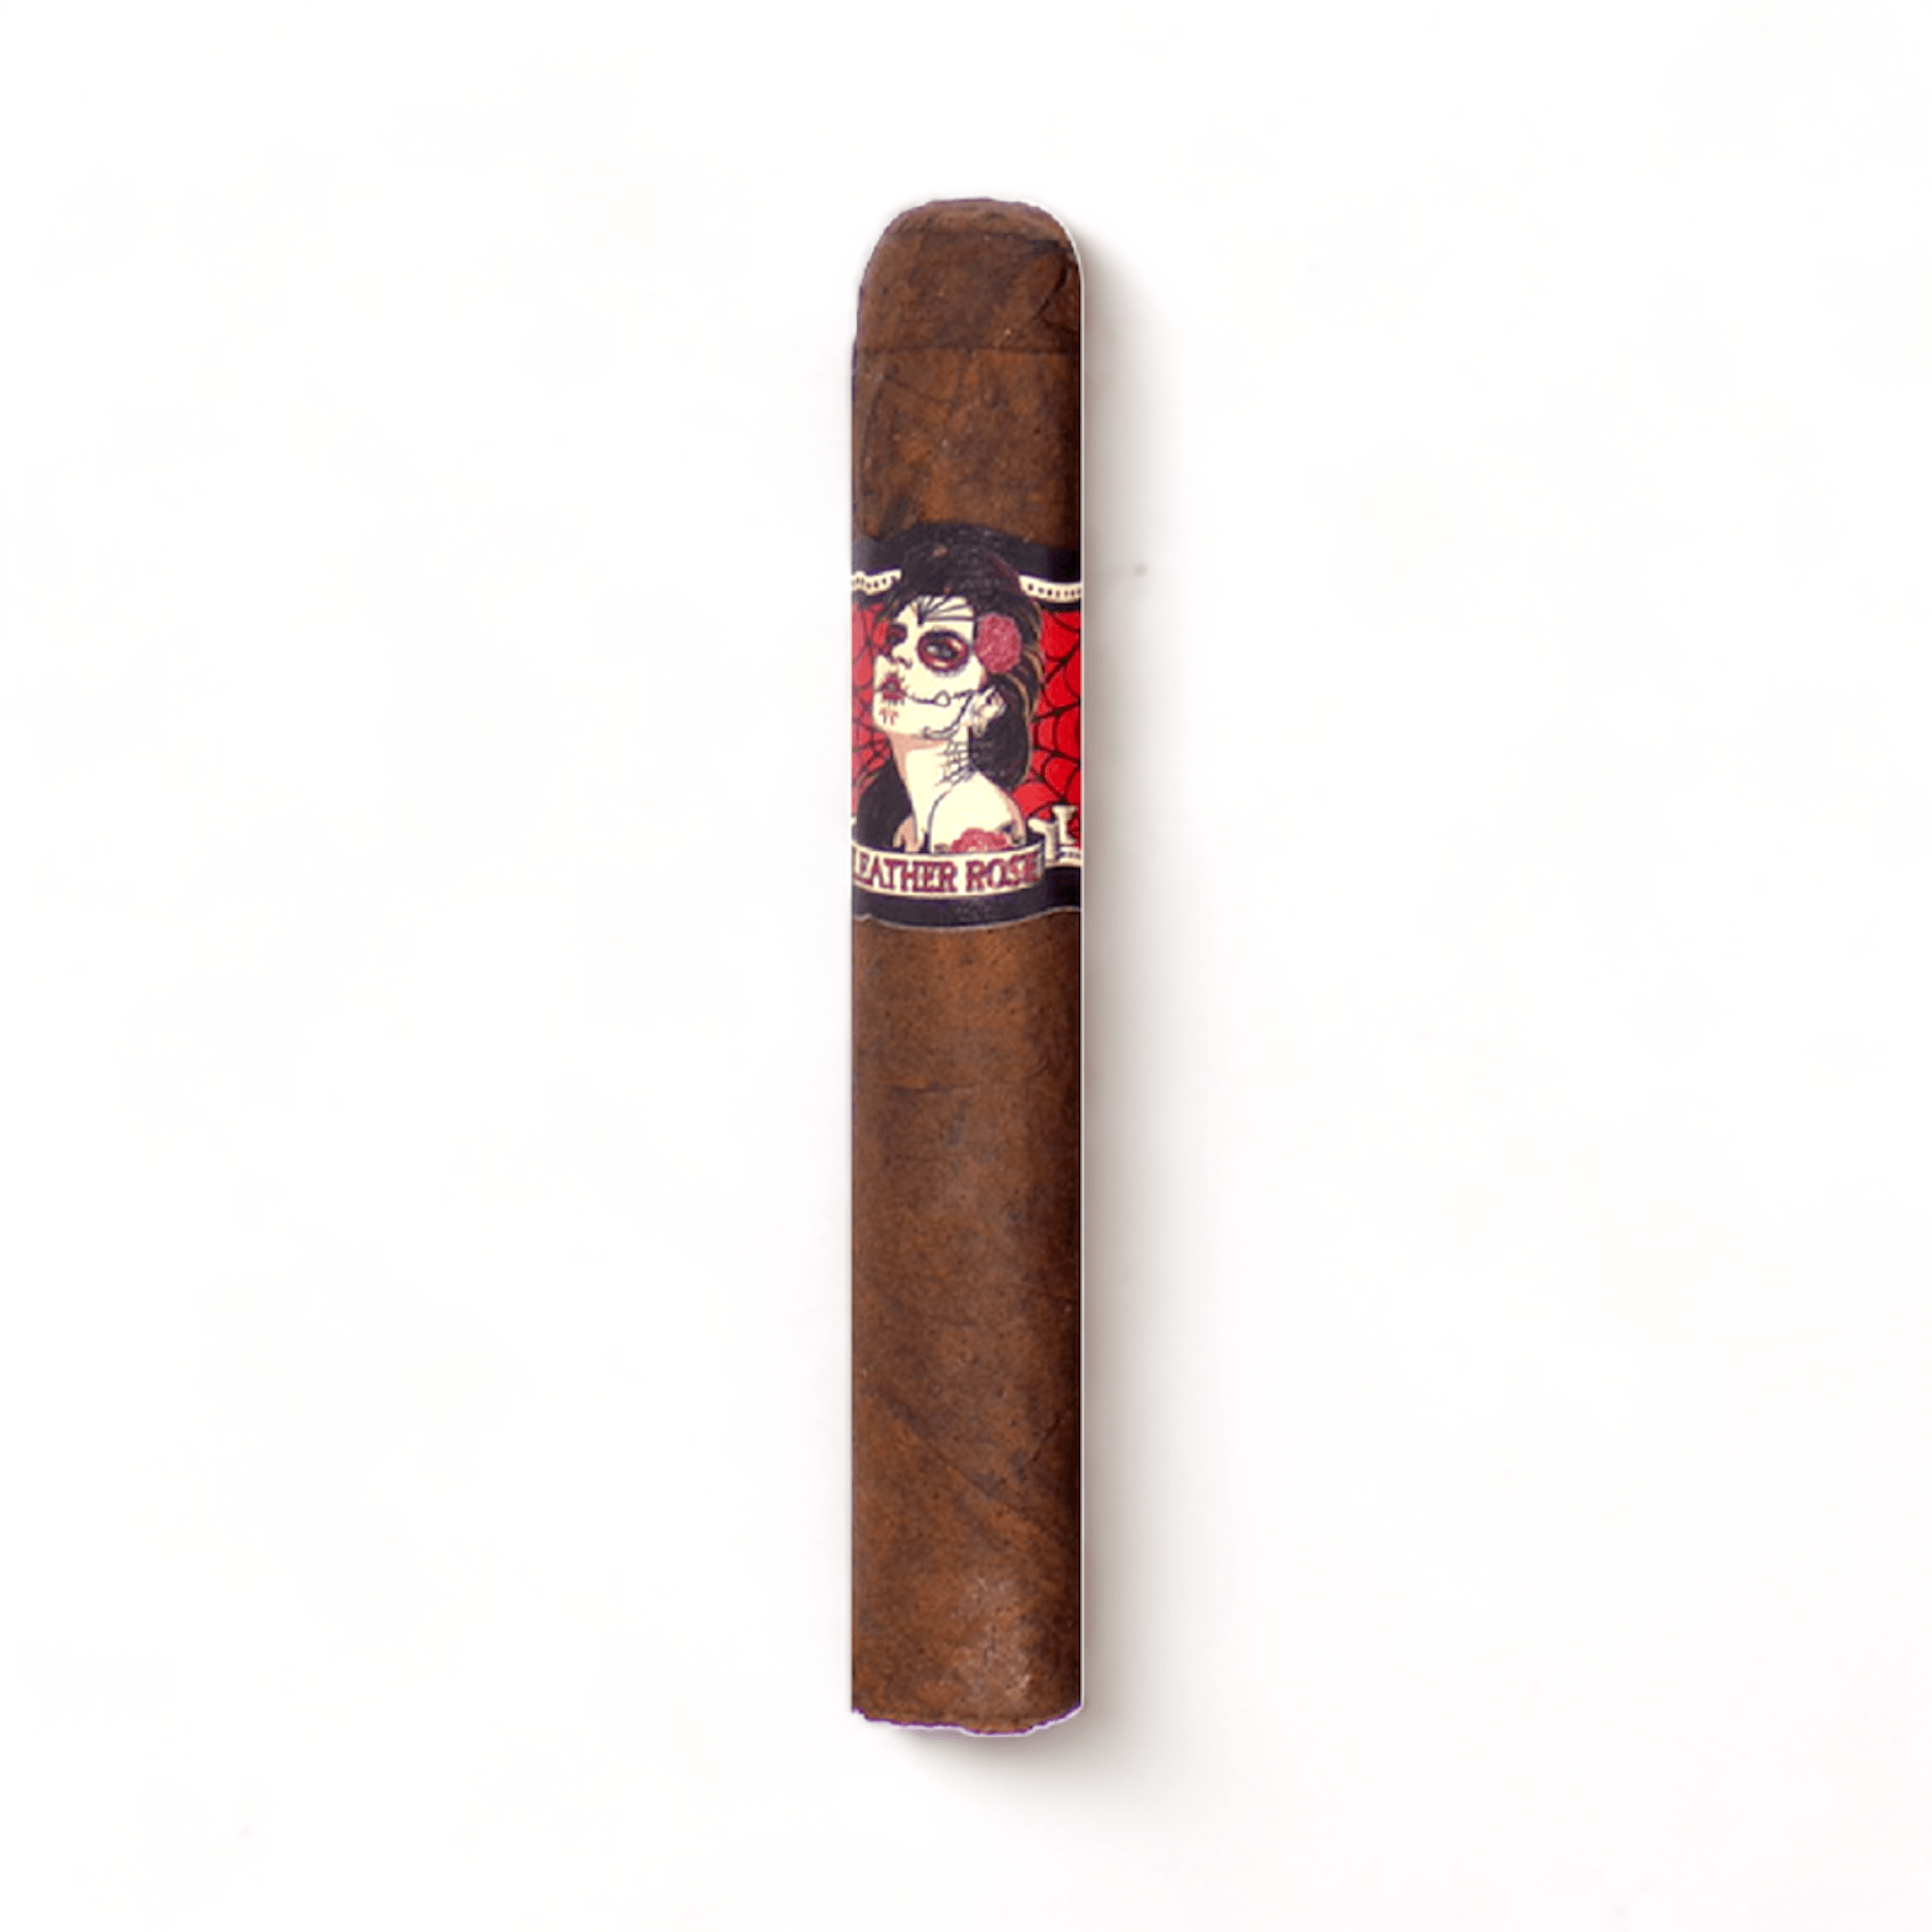 Deadwood Cigars | Leather Rose Petite Corona | Box of 24 - hk.cohcigars